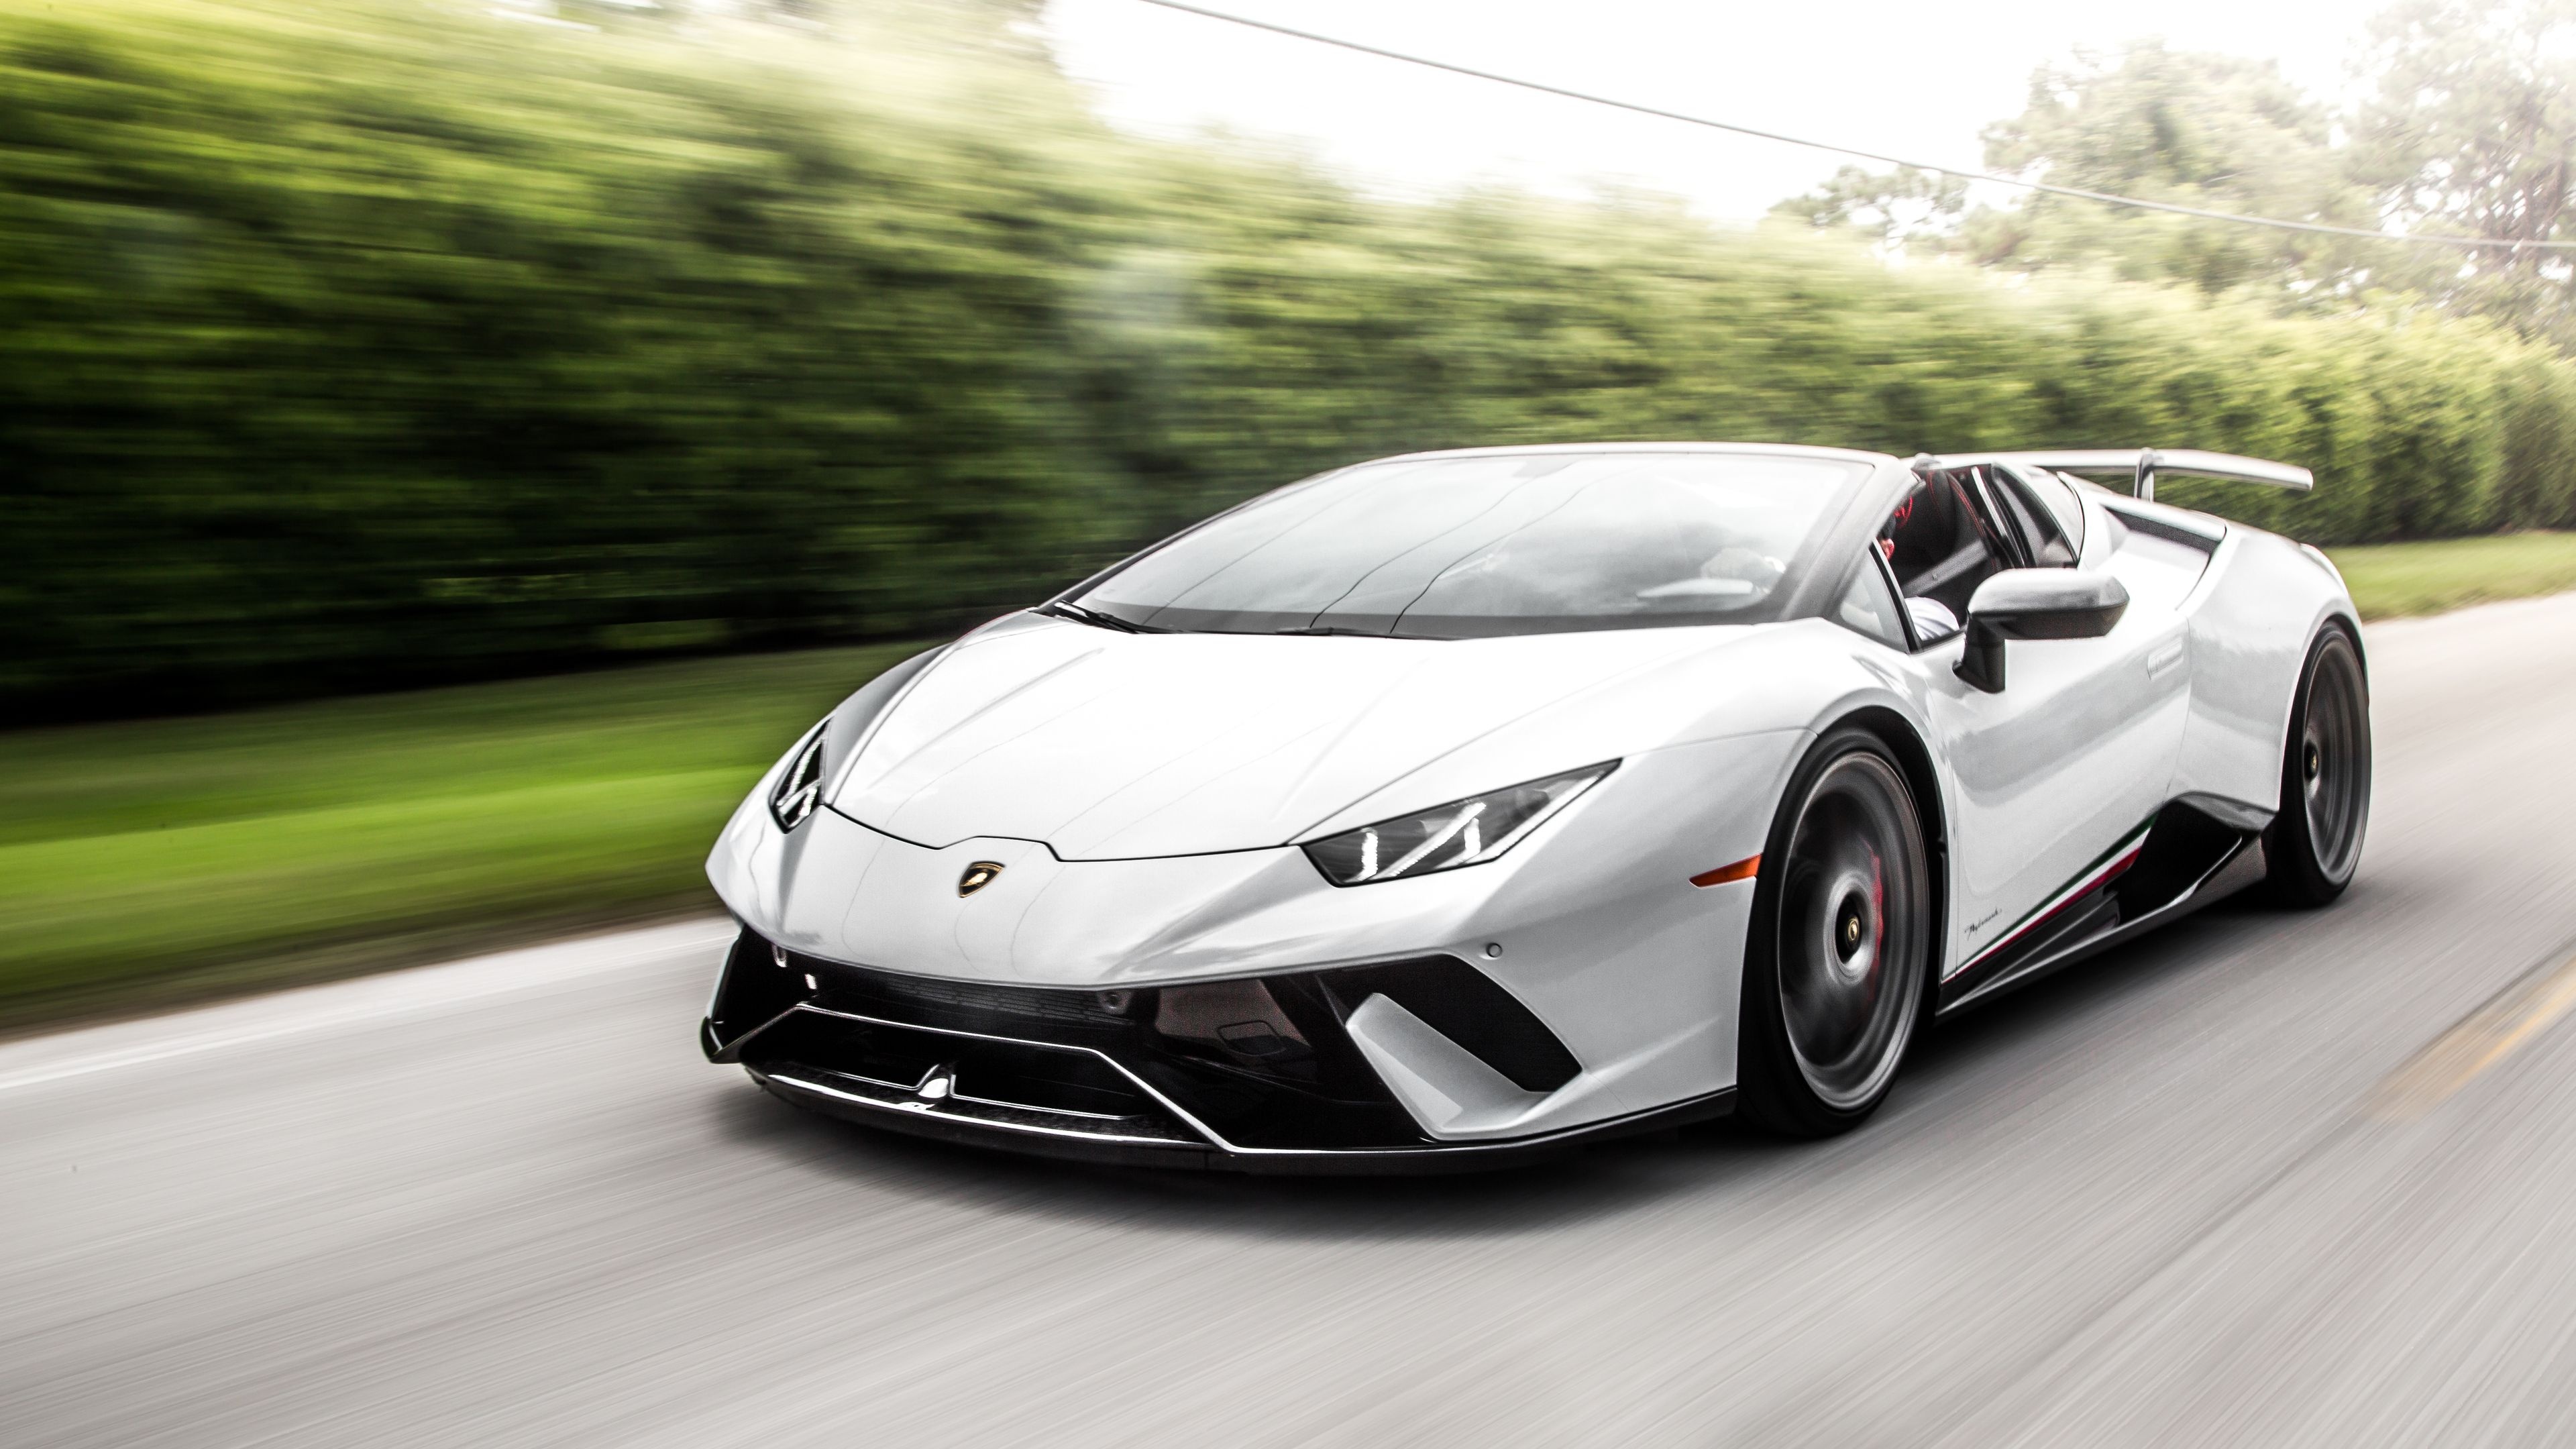 Lamborghini Huracan, White lightning, Supreme elegance, High-performance marvel, 3840x2160 4K Desktop